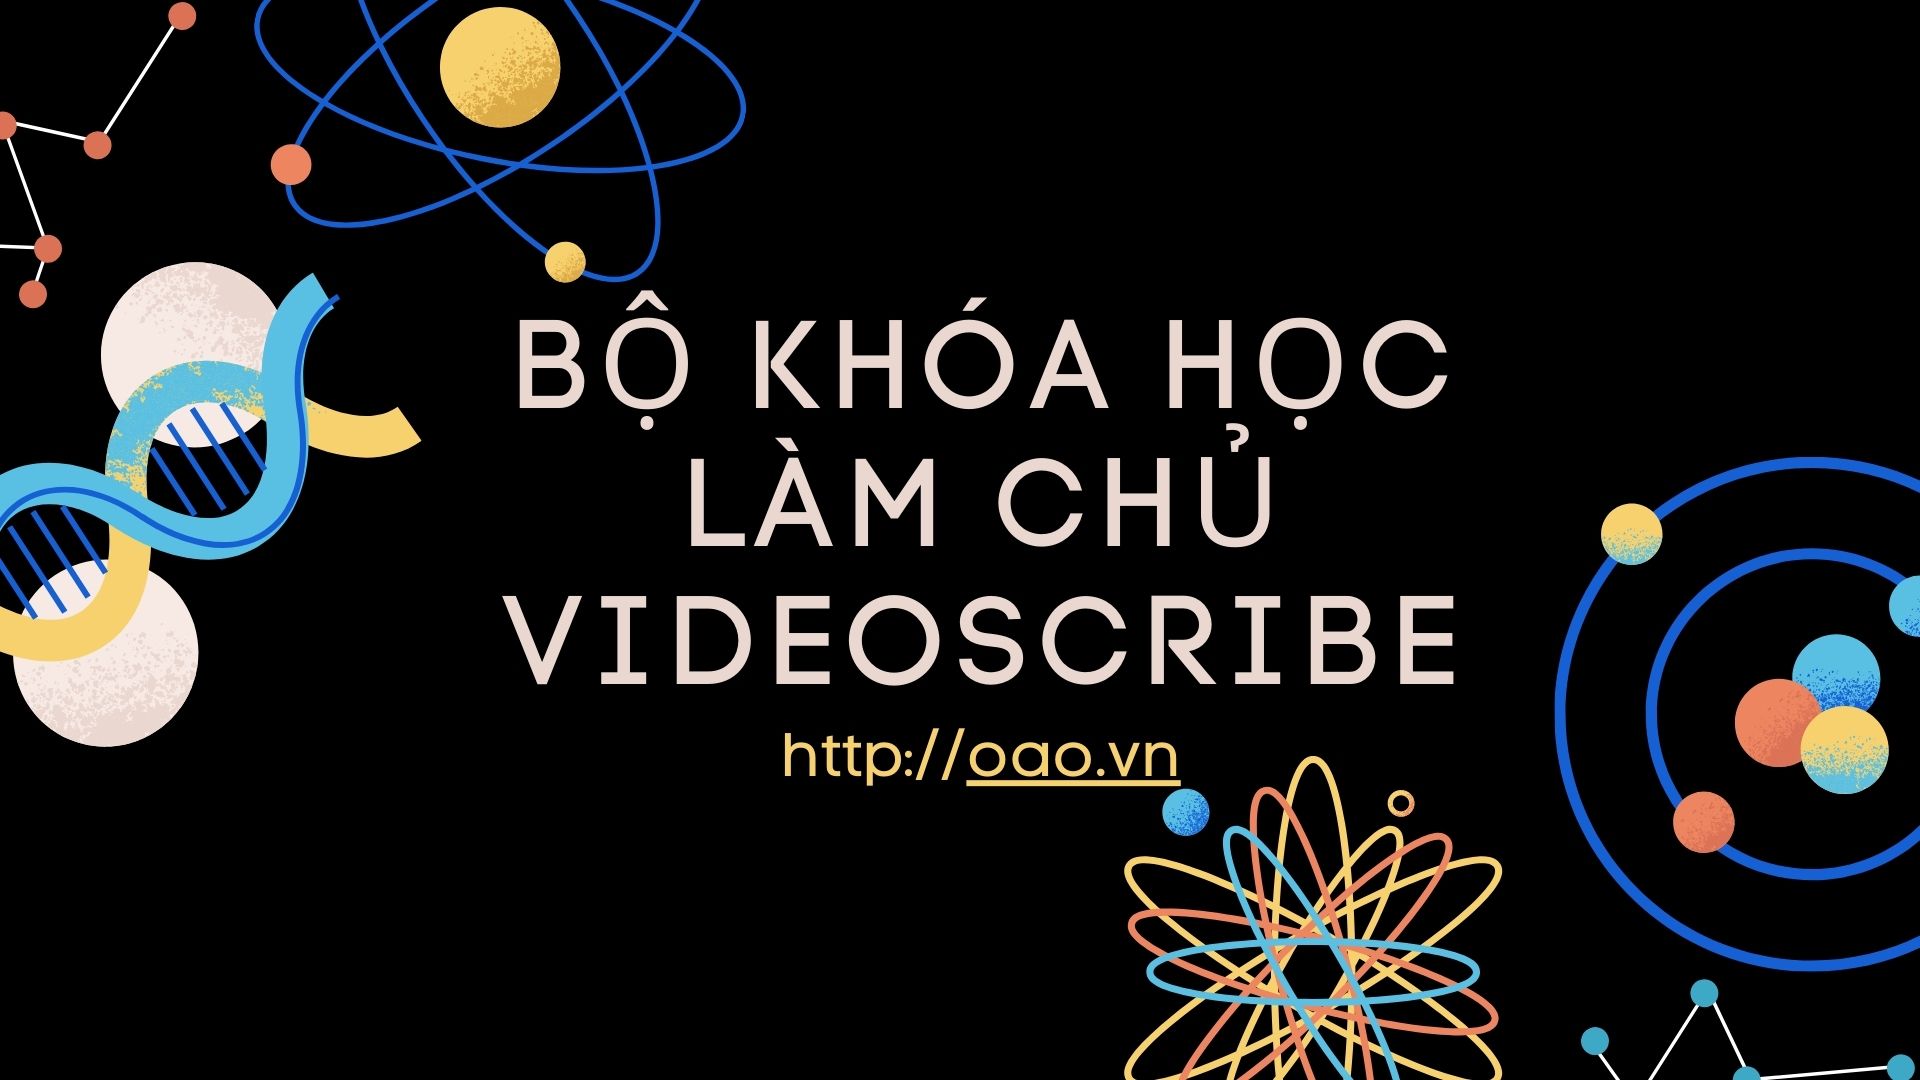 Bo khoa hoc lam chu videoscribe